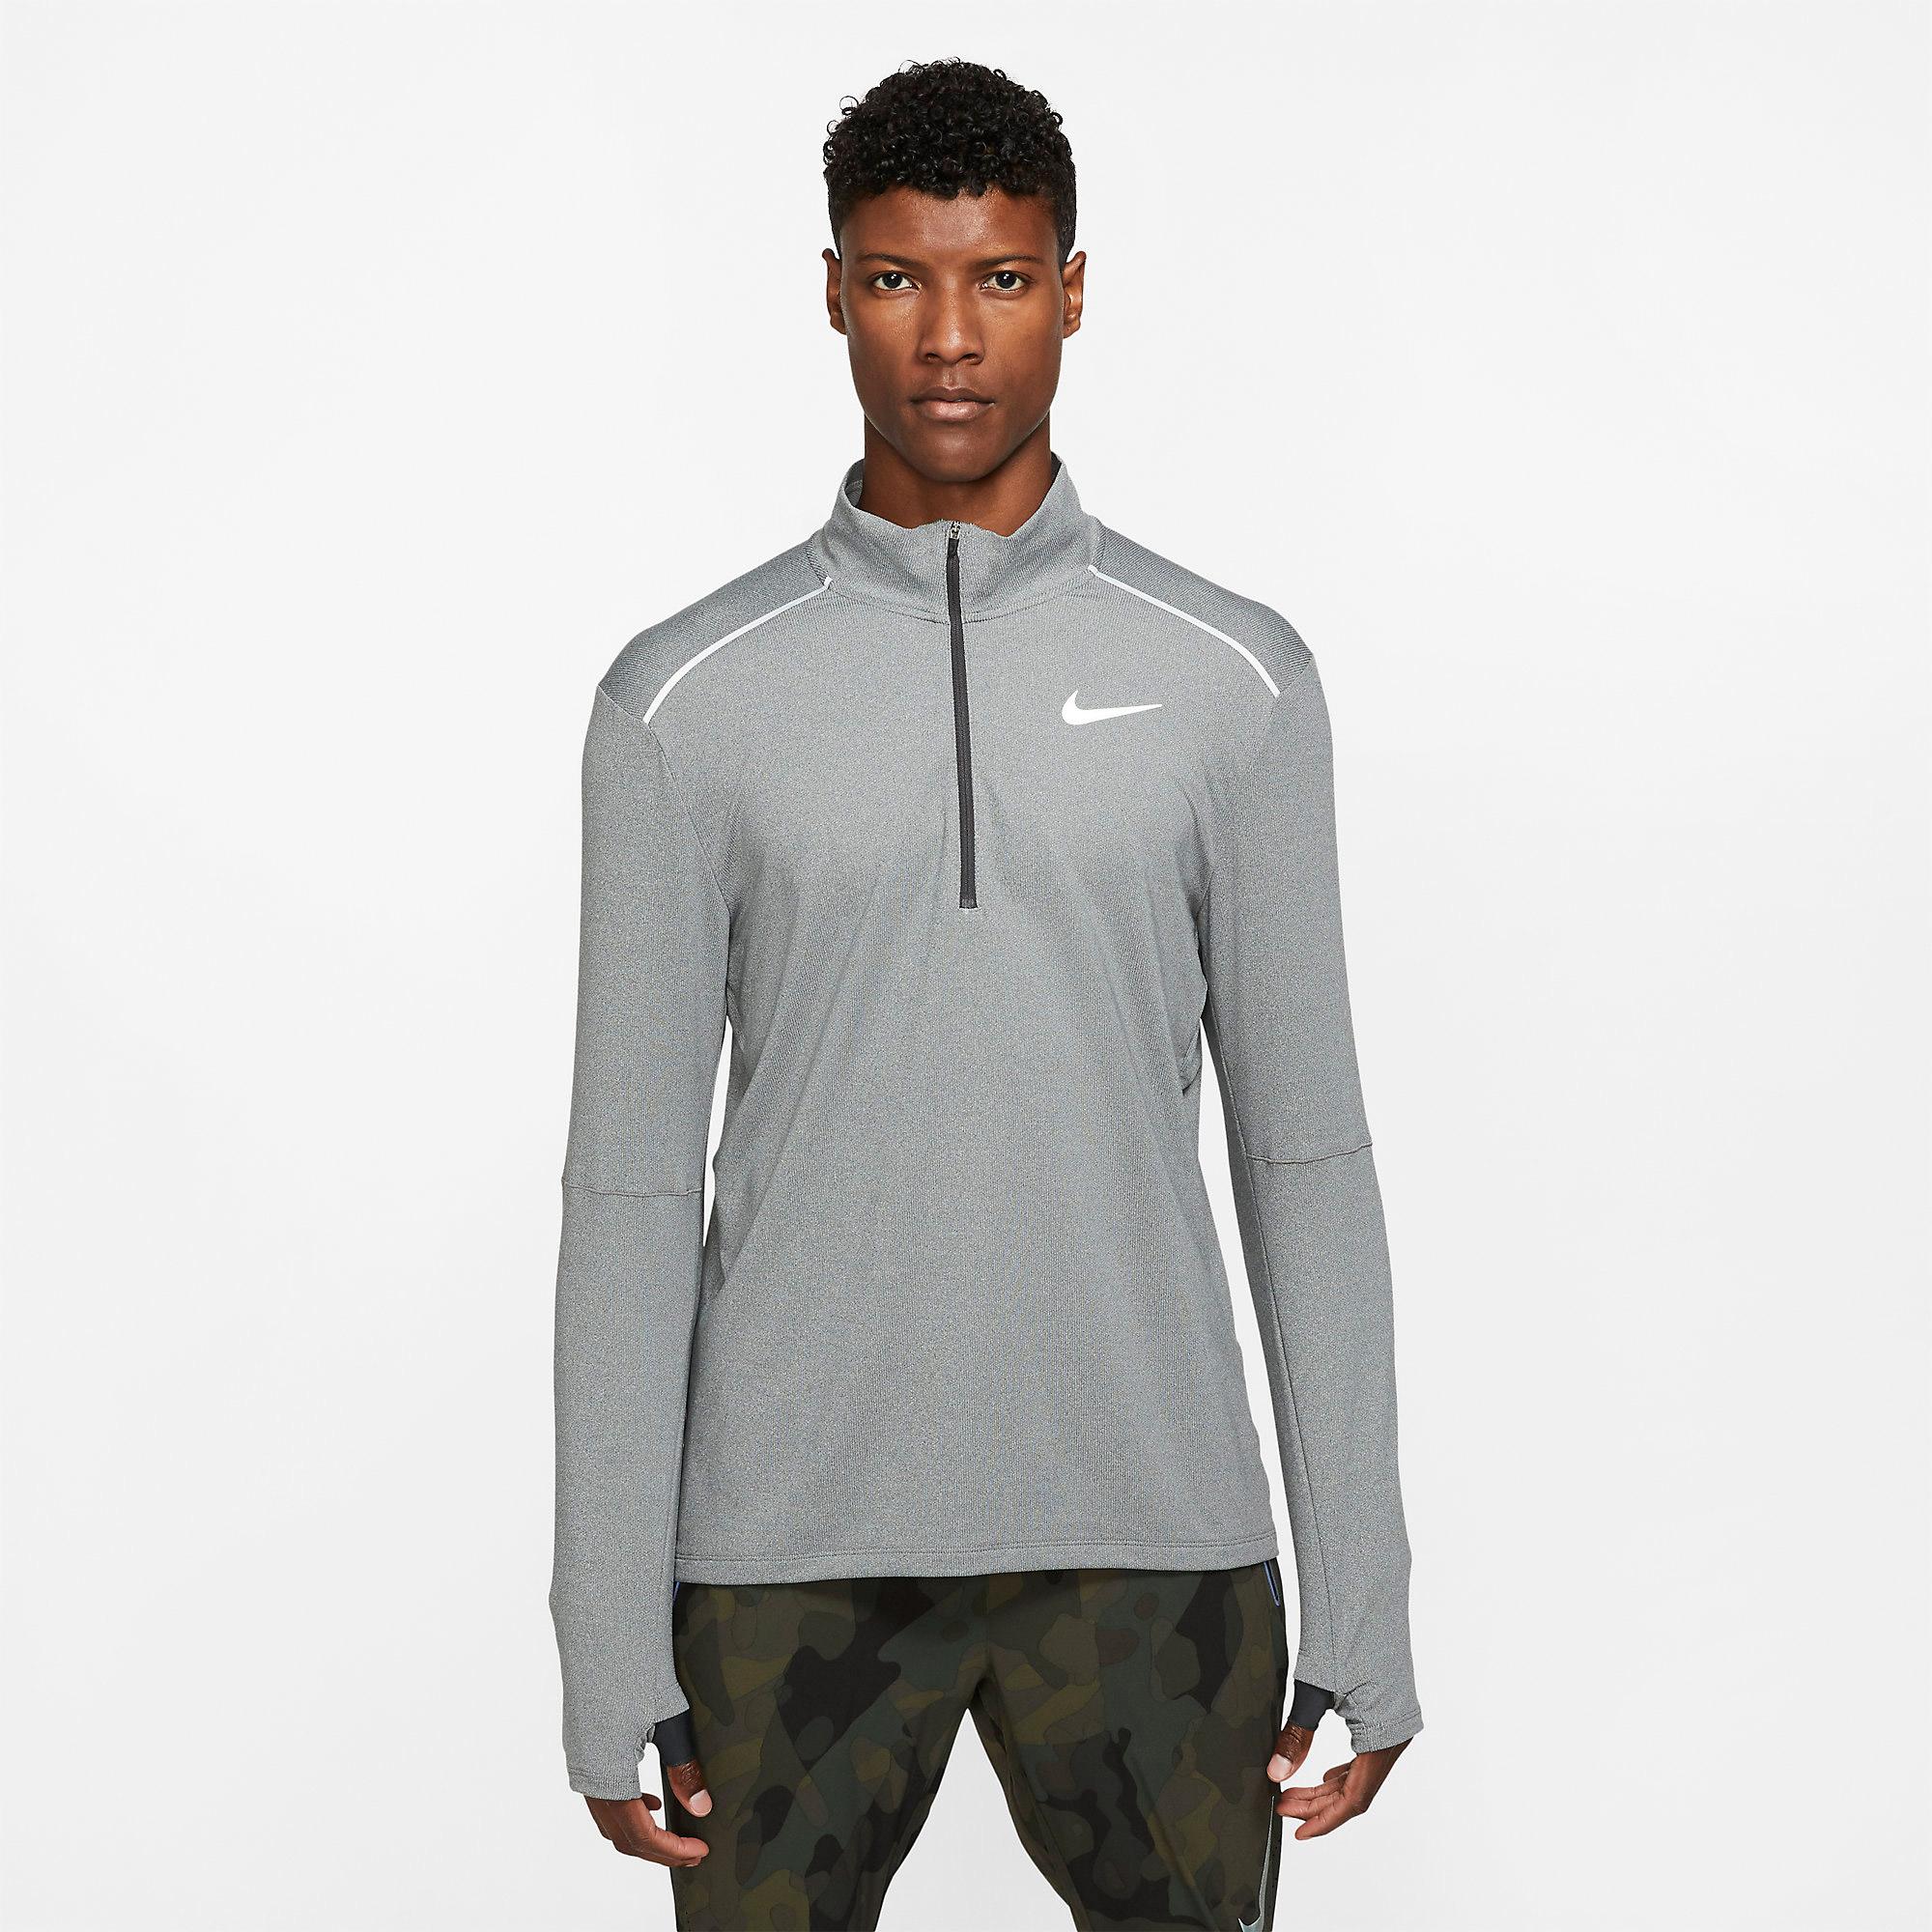 Nike Mens Half Zip Running Top - Dark Smoke Grey - Tennisnuts.com